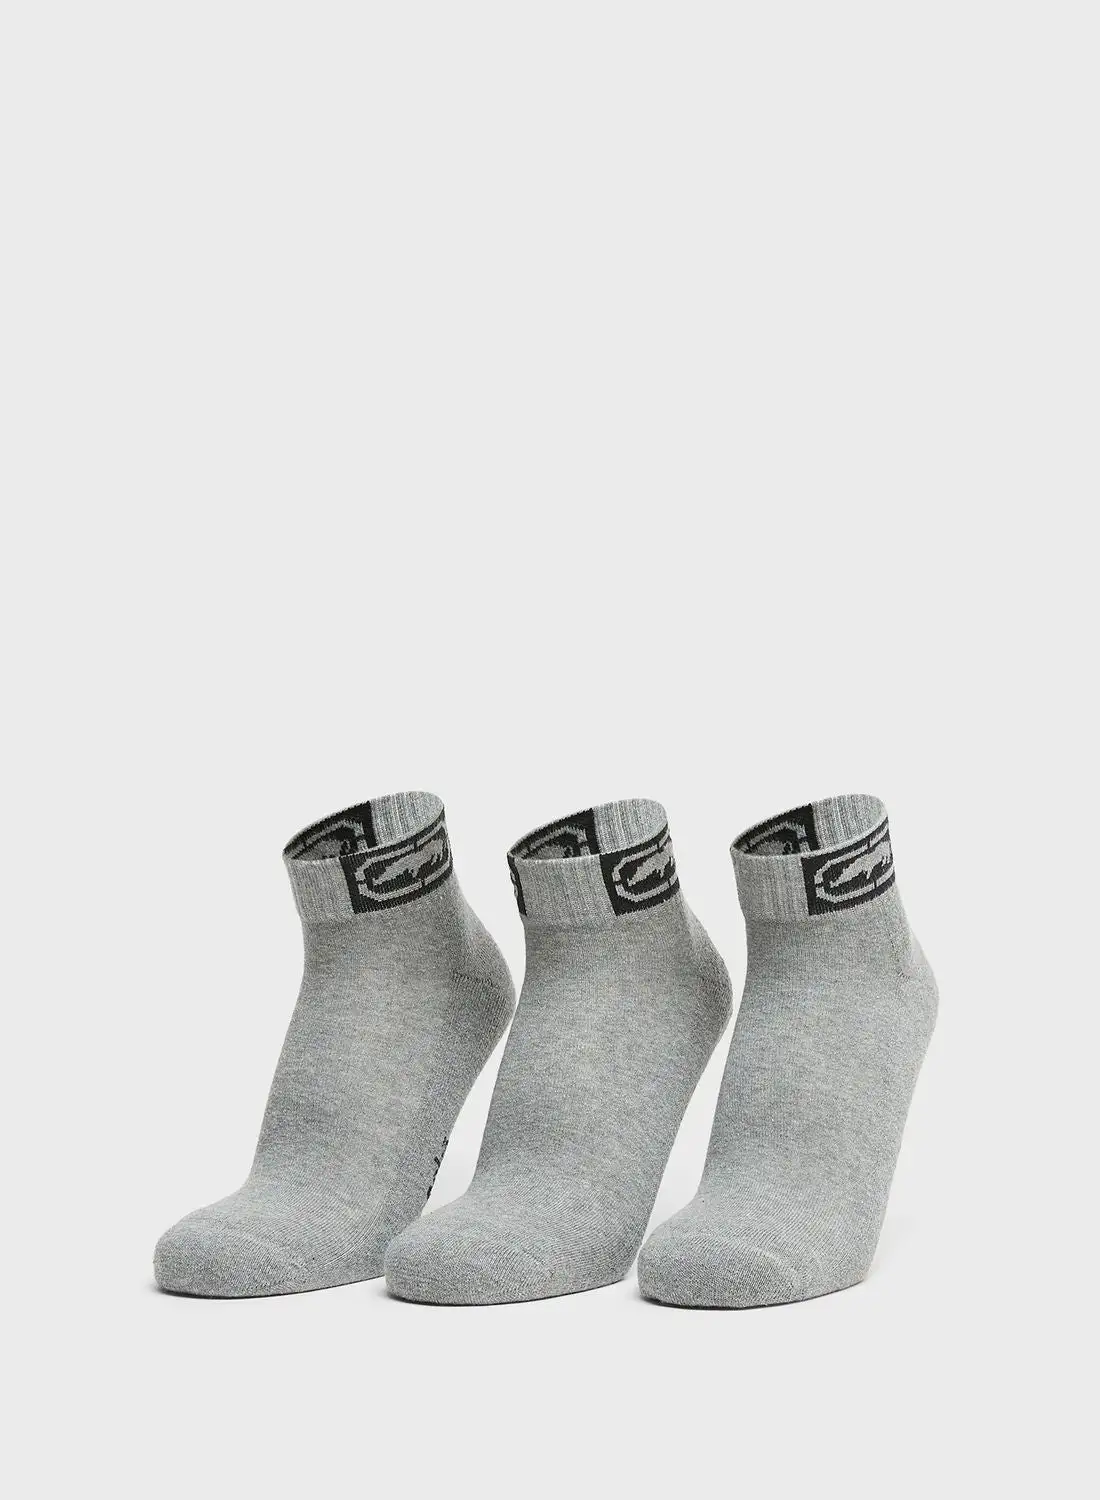 Ecko 3 Pack Textured Ankle Socks